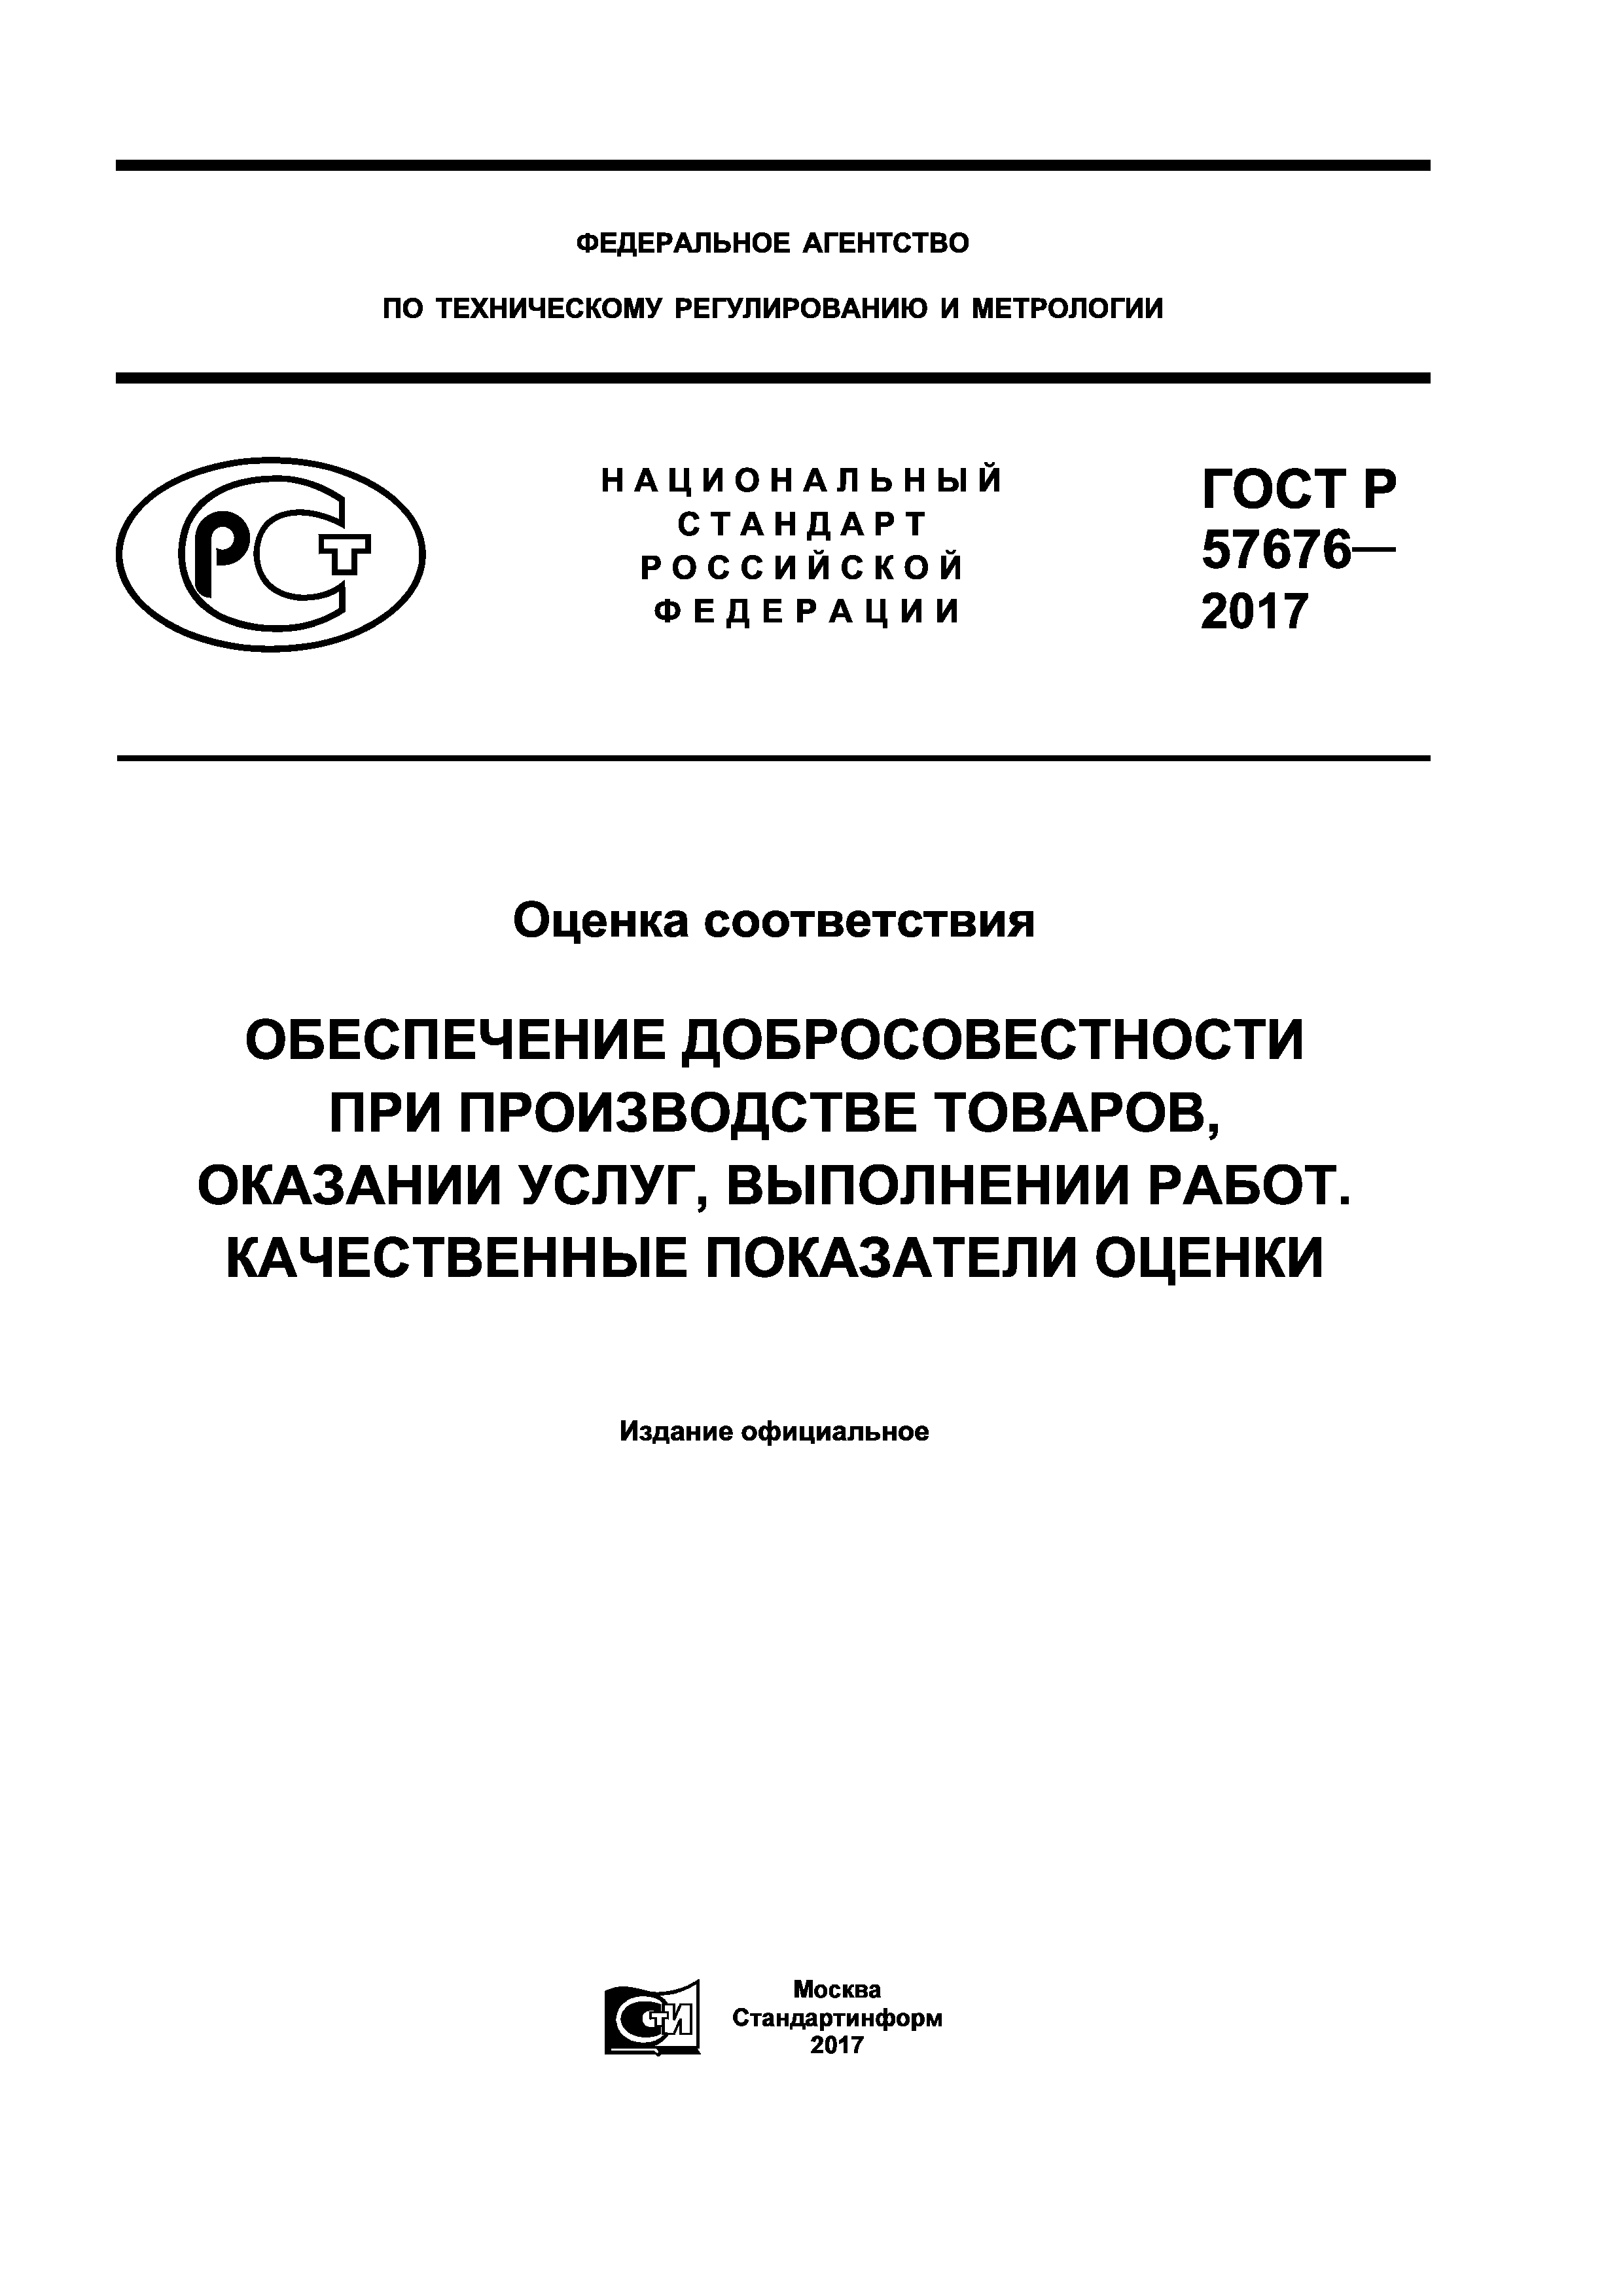 ГОСТ Р 57676-2017